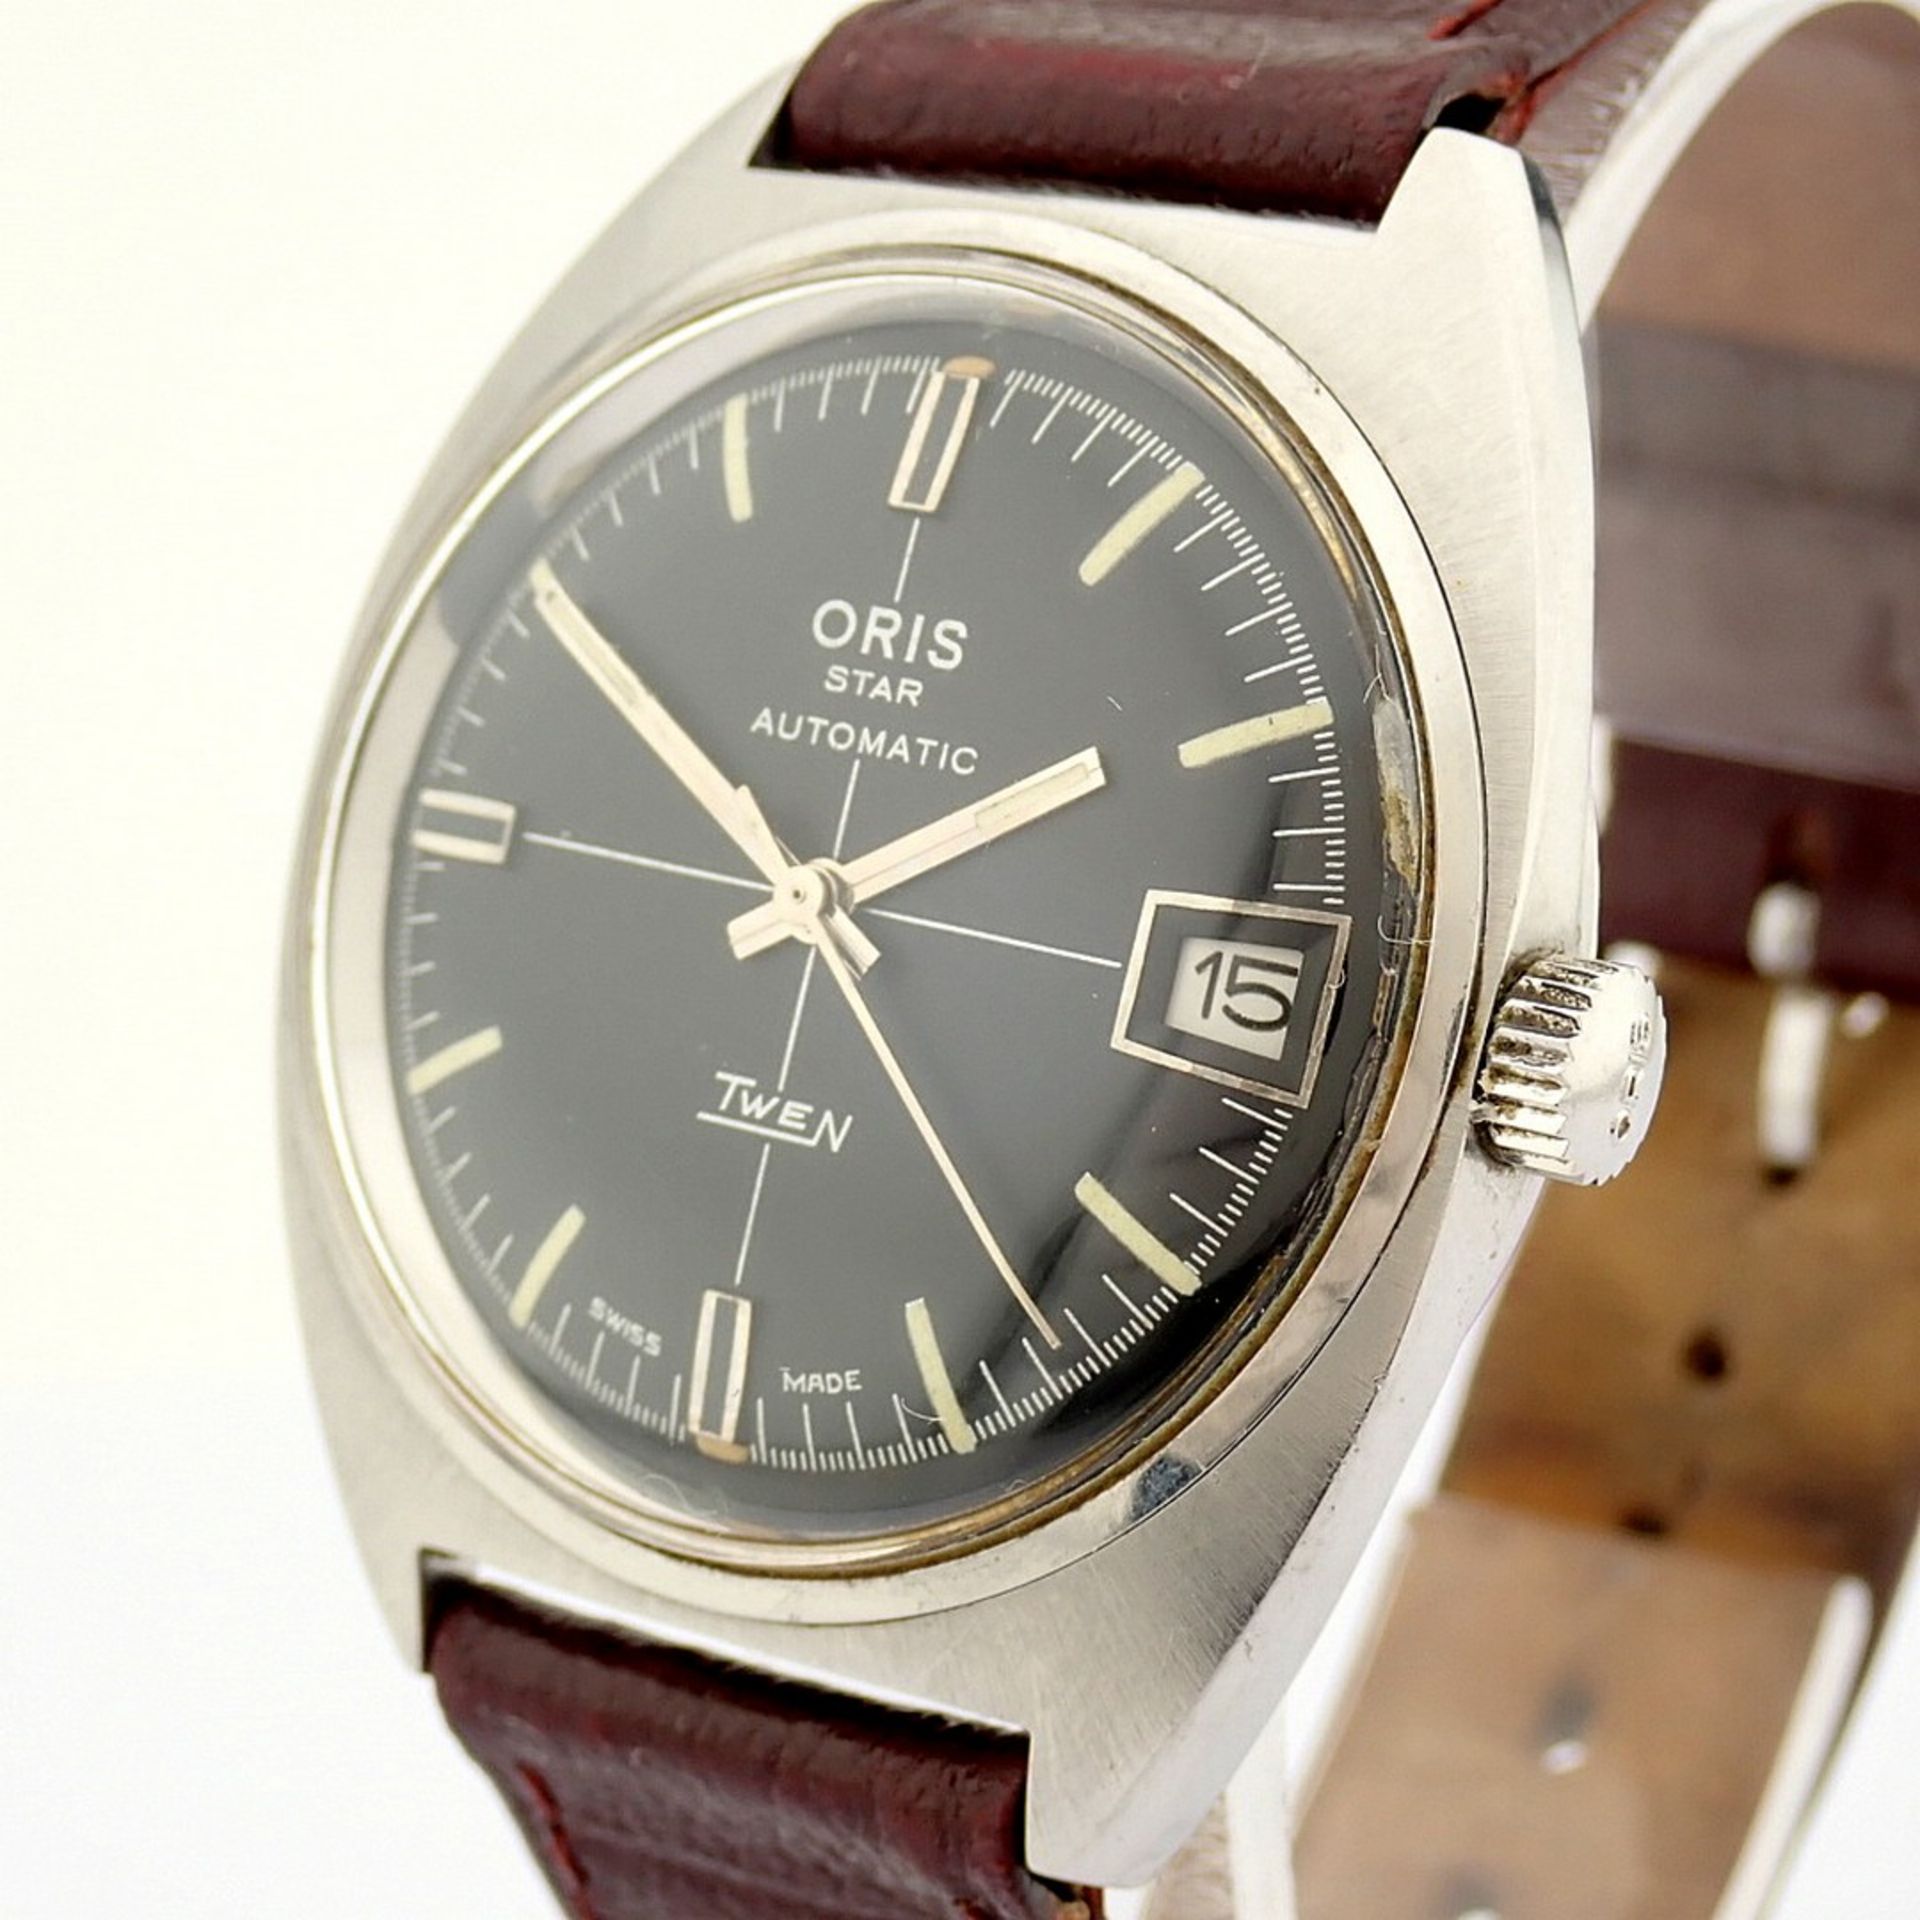 Oris / Oris Star Automatic Twen - Gentlemen's Steel Wrist Watch - Image 5 of 10